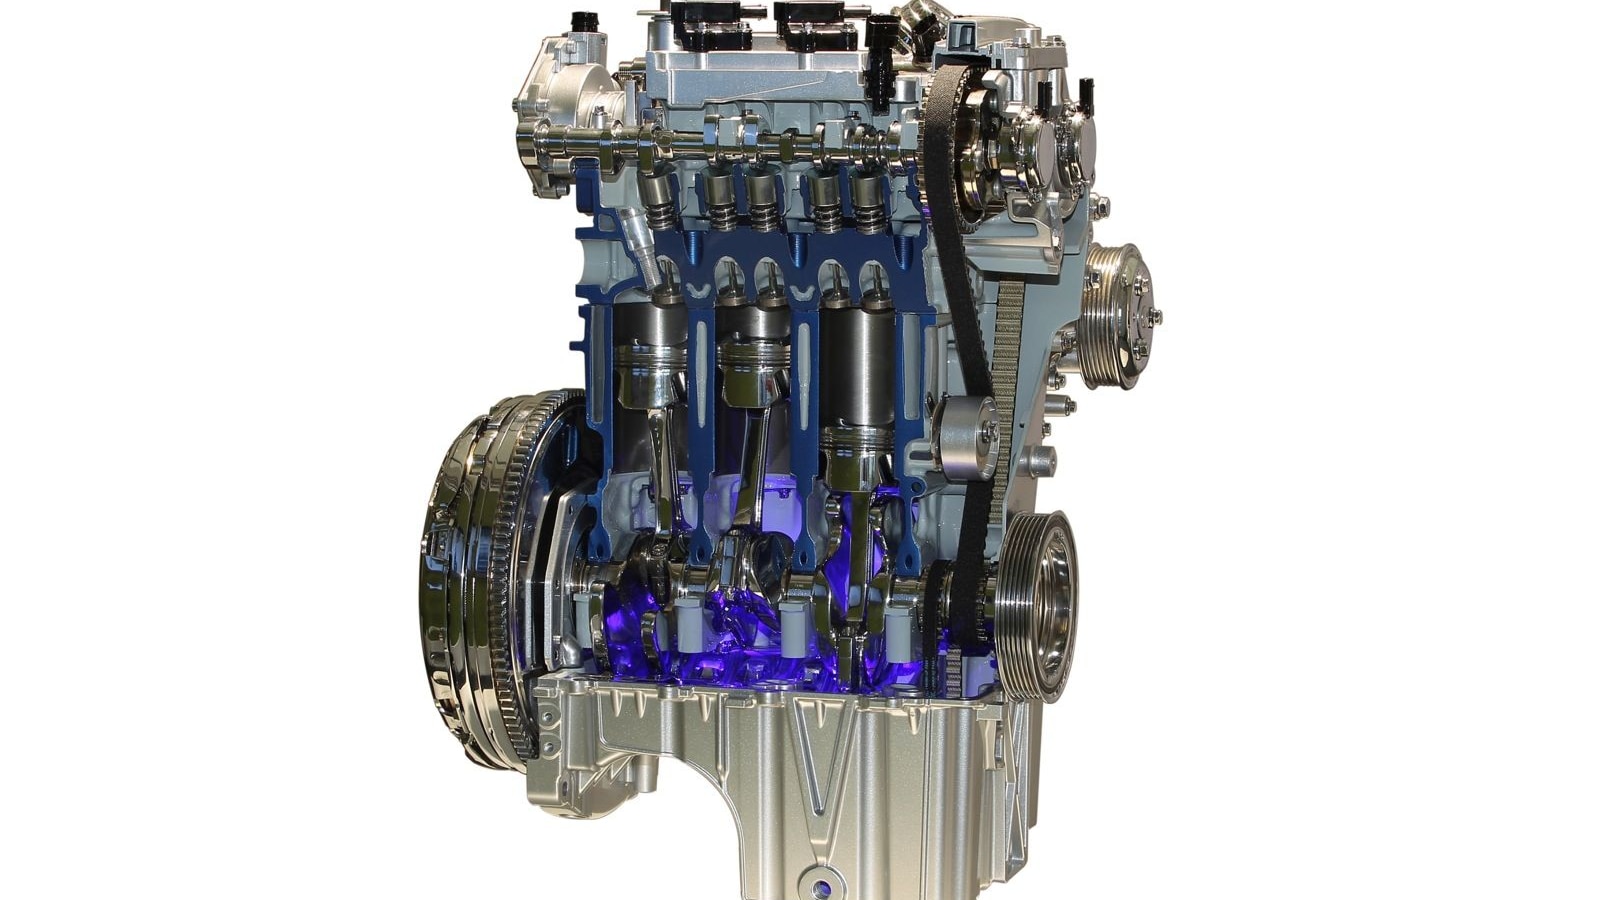 Ford's award-winning 1.0-liter EcoBoost engine